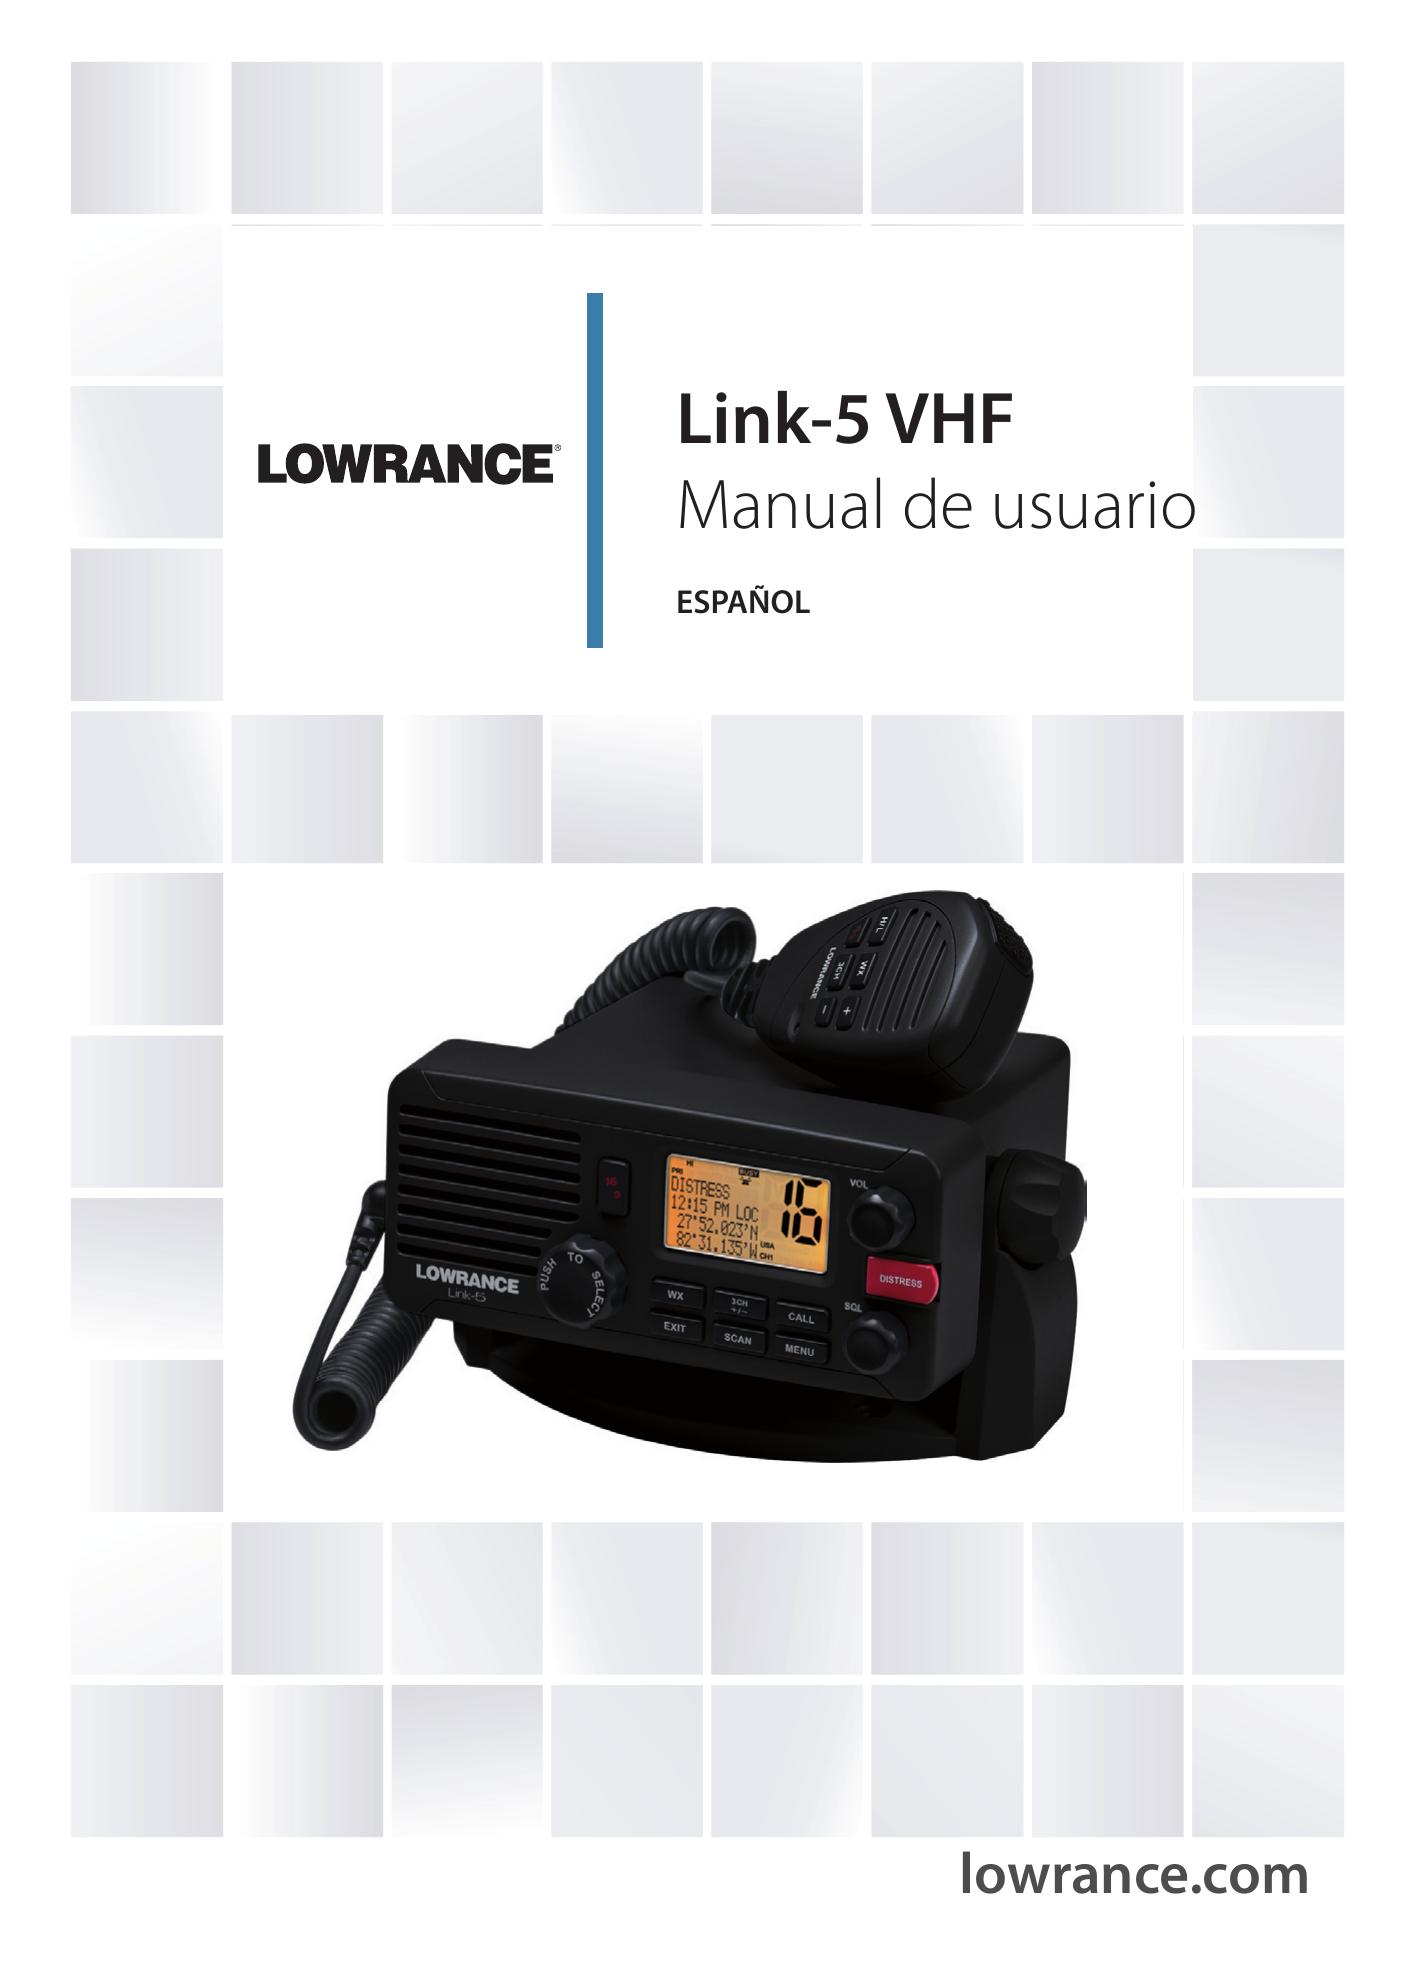 Lowrance electronic LINK-5 VHF Marine GPS System User Manual